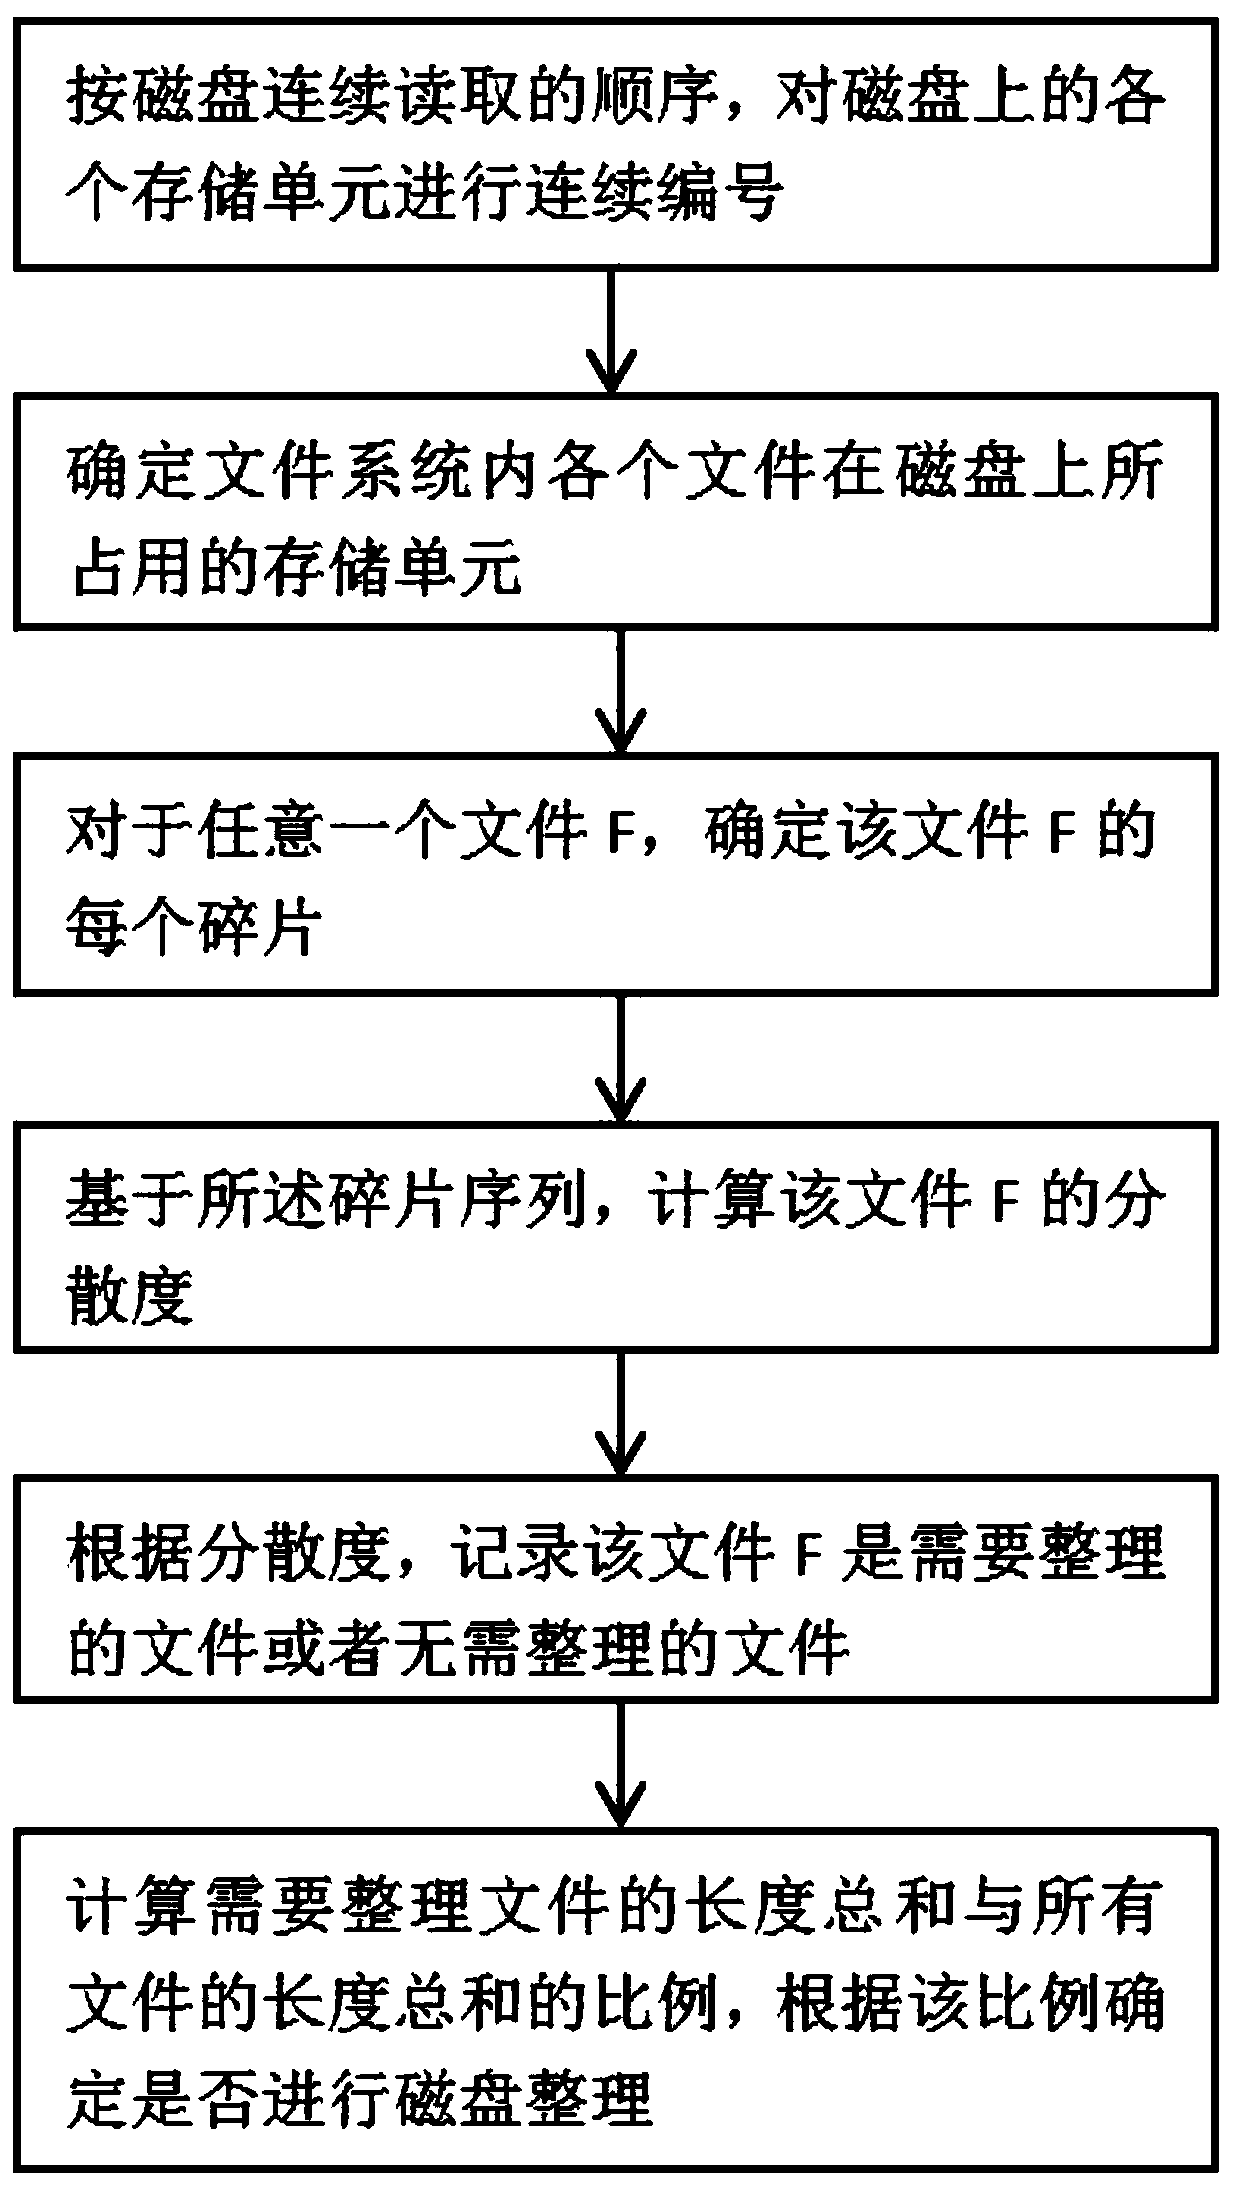 Management method of computer file system